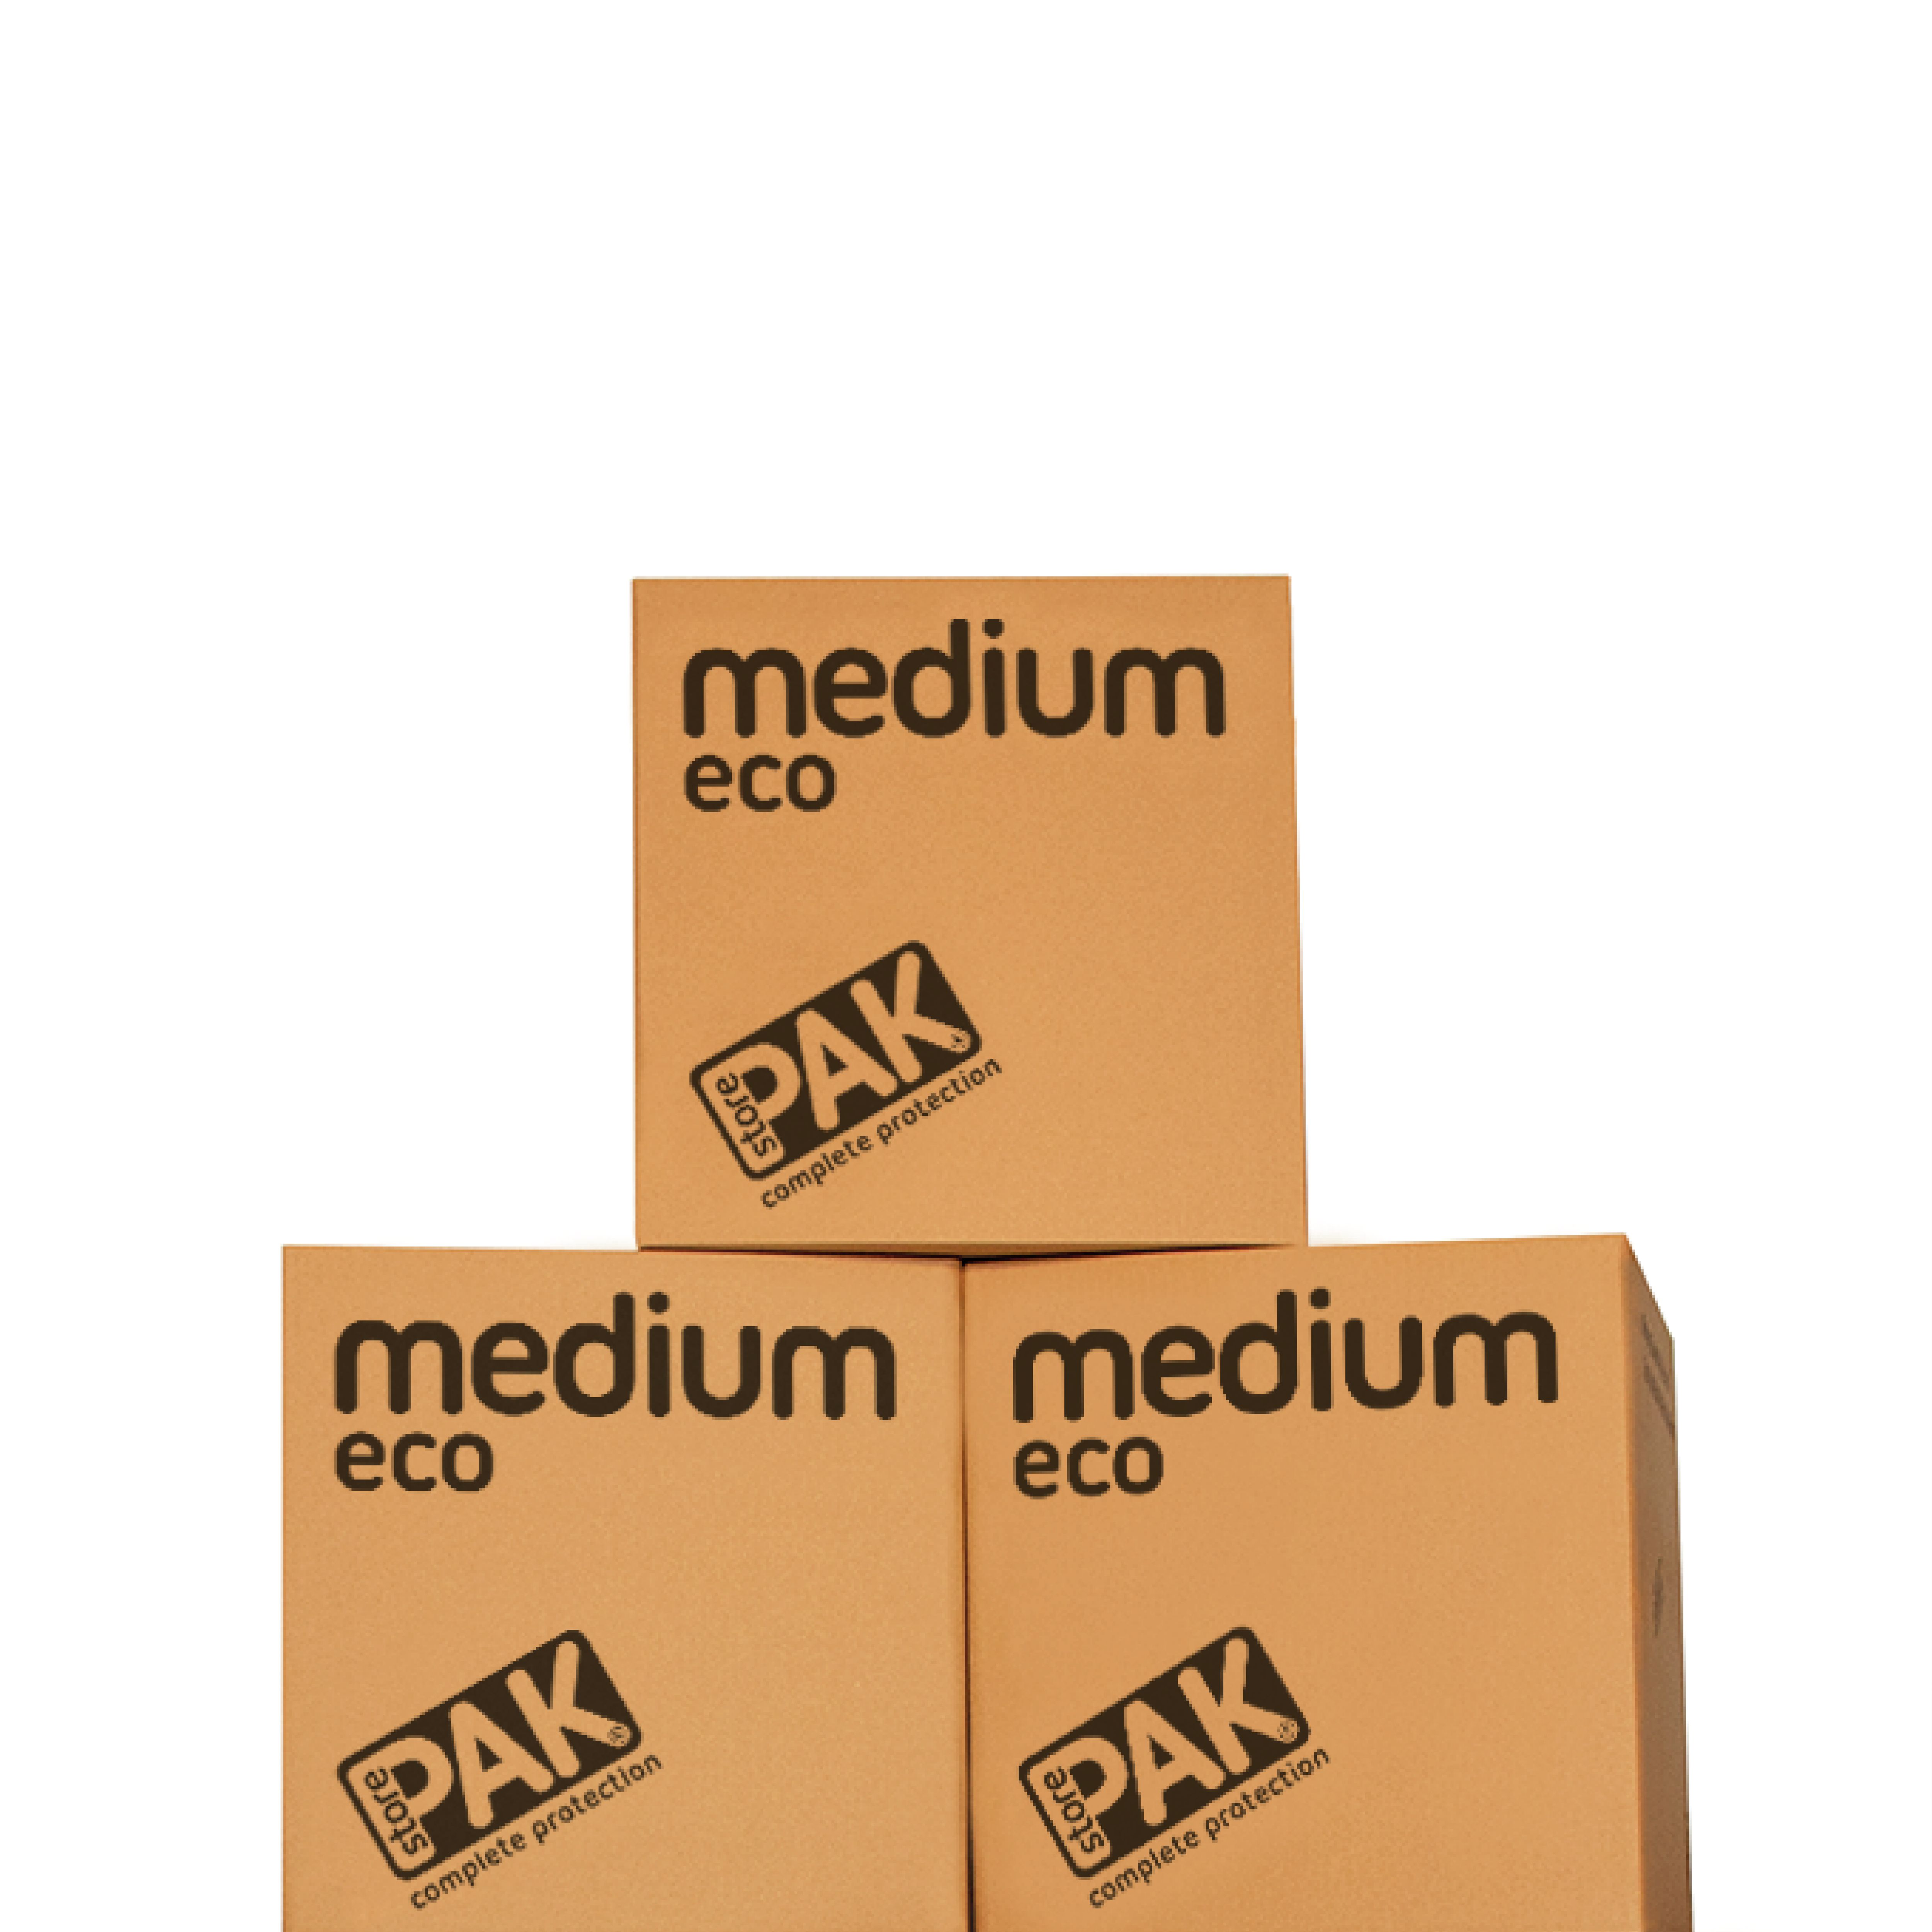 StorePAK Eco Medium Cardboard Moving box, Pack of 3